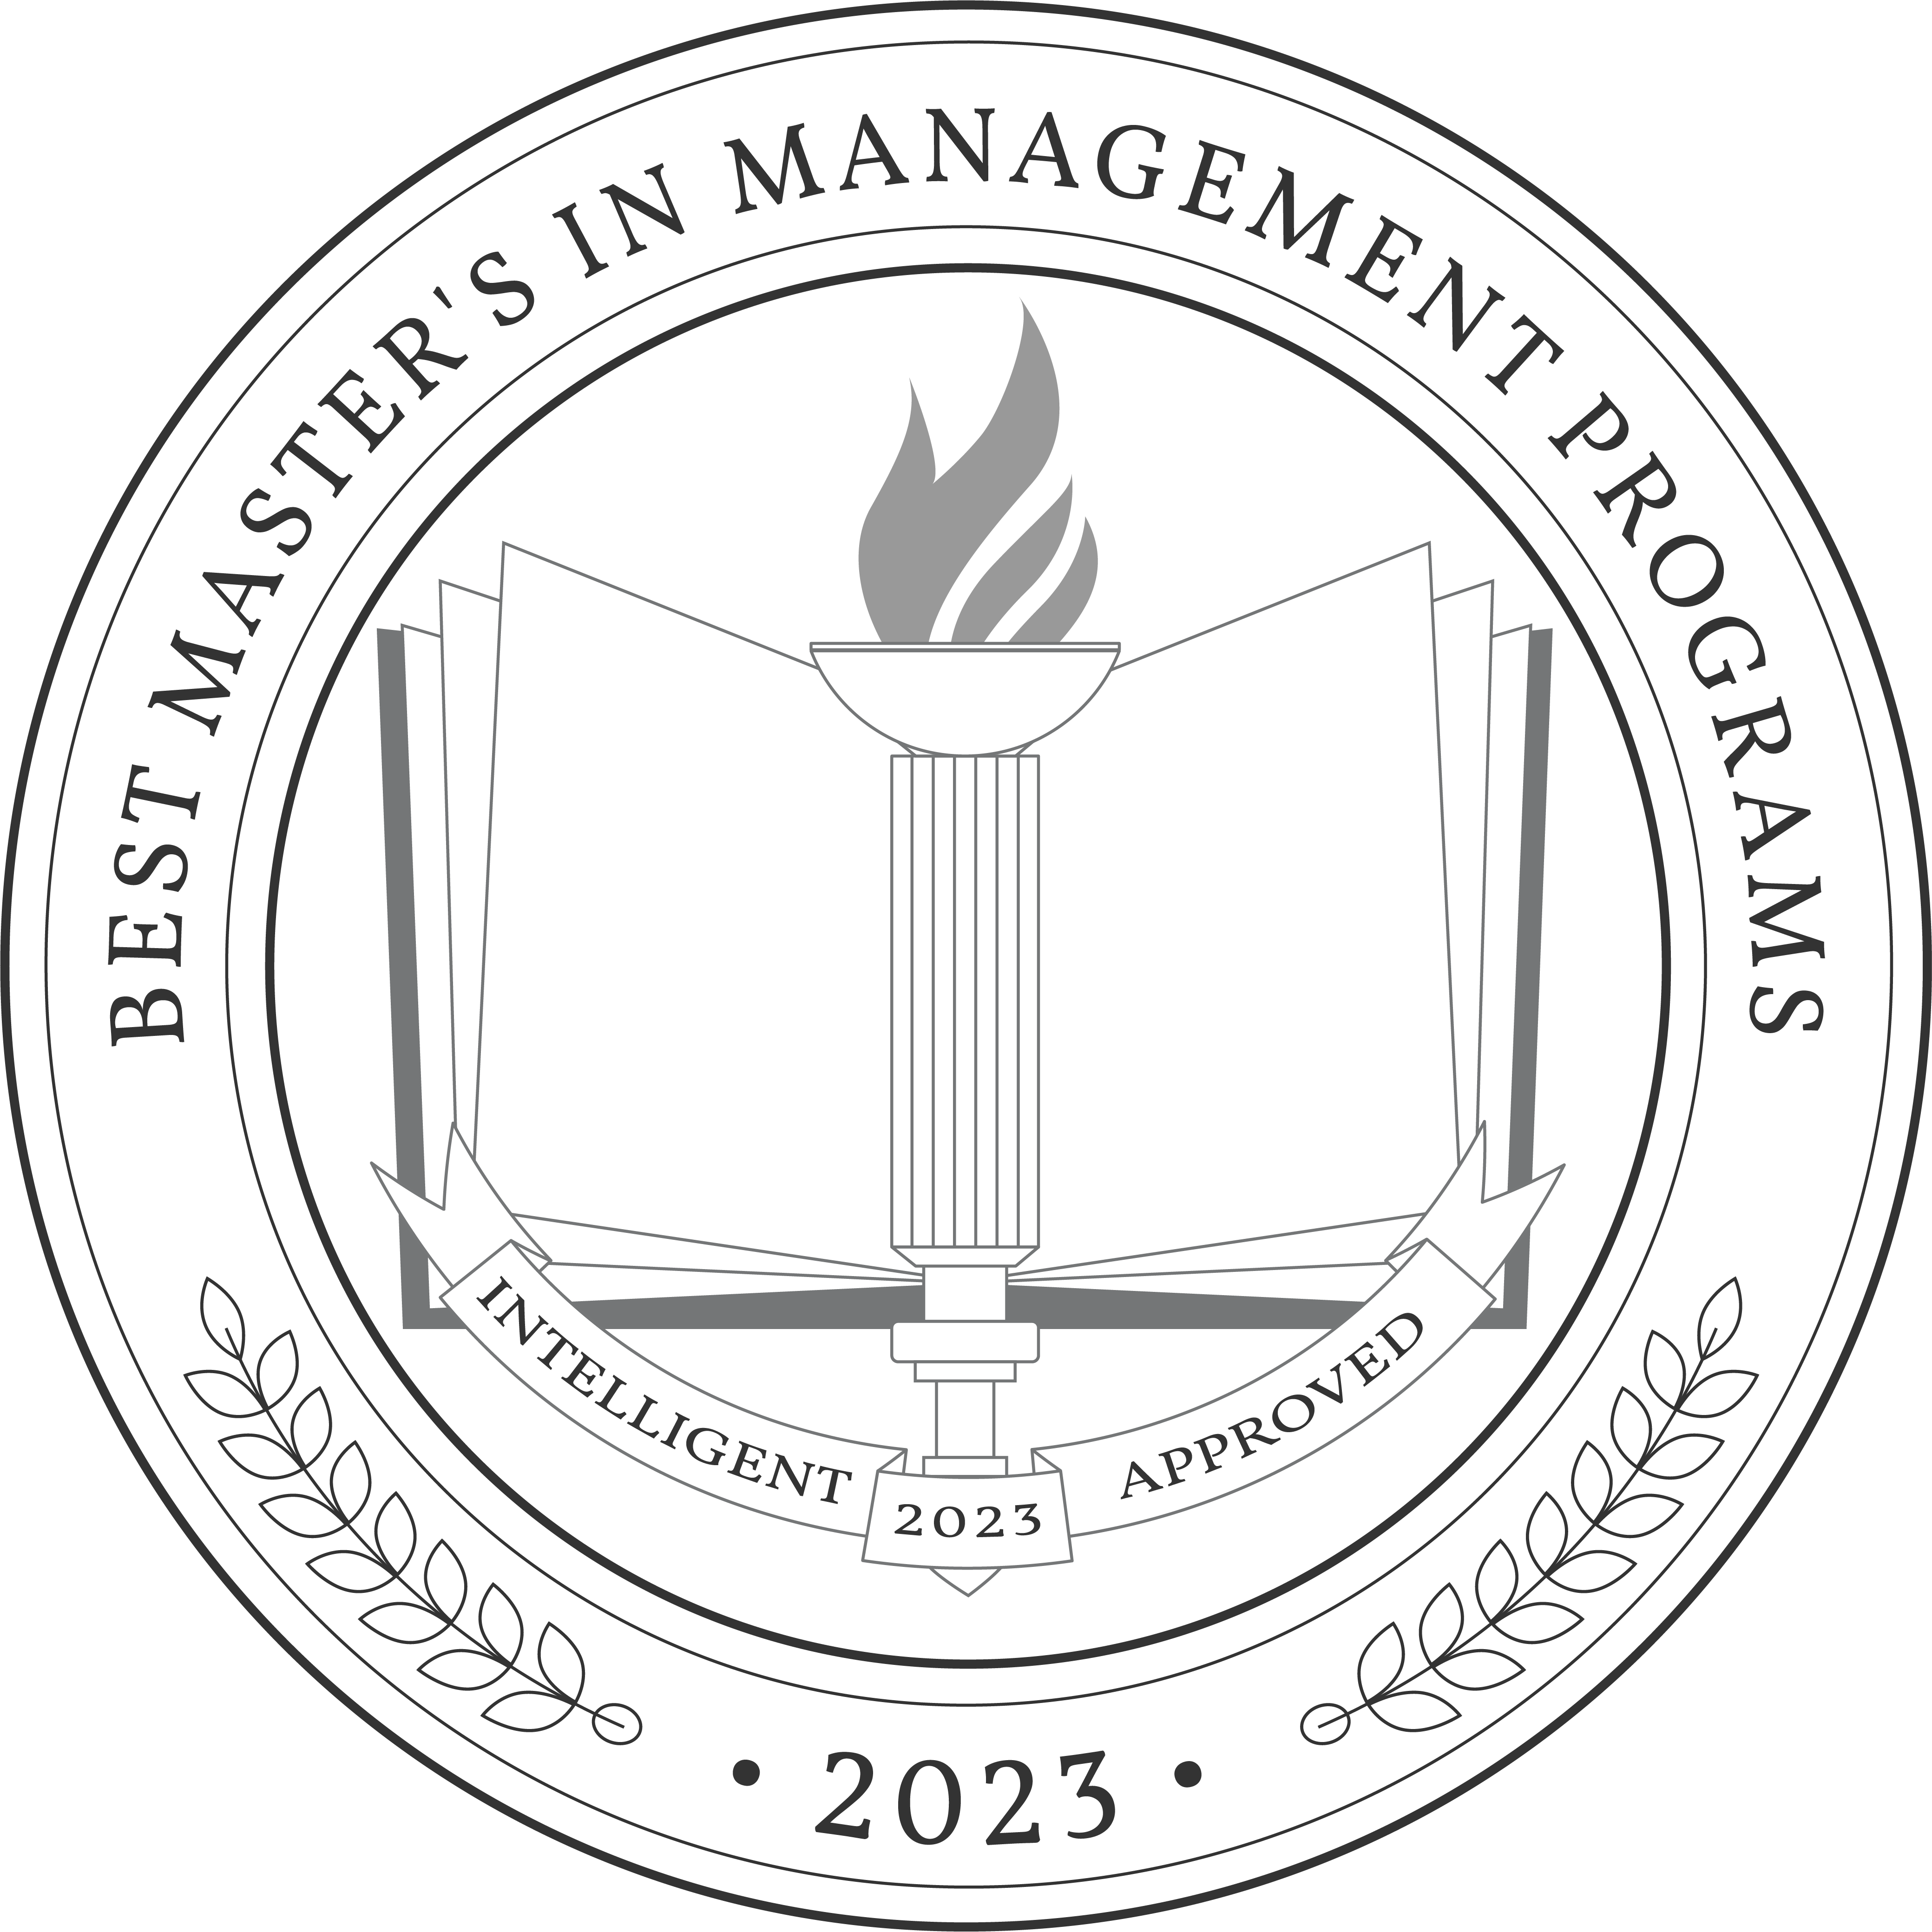 Best Master's in Management Programs 2023